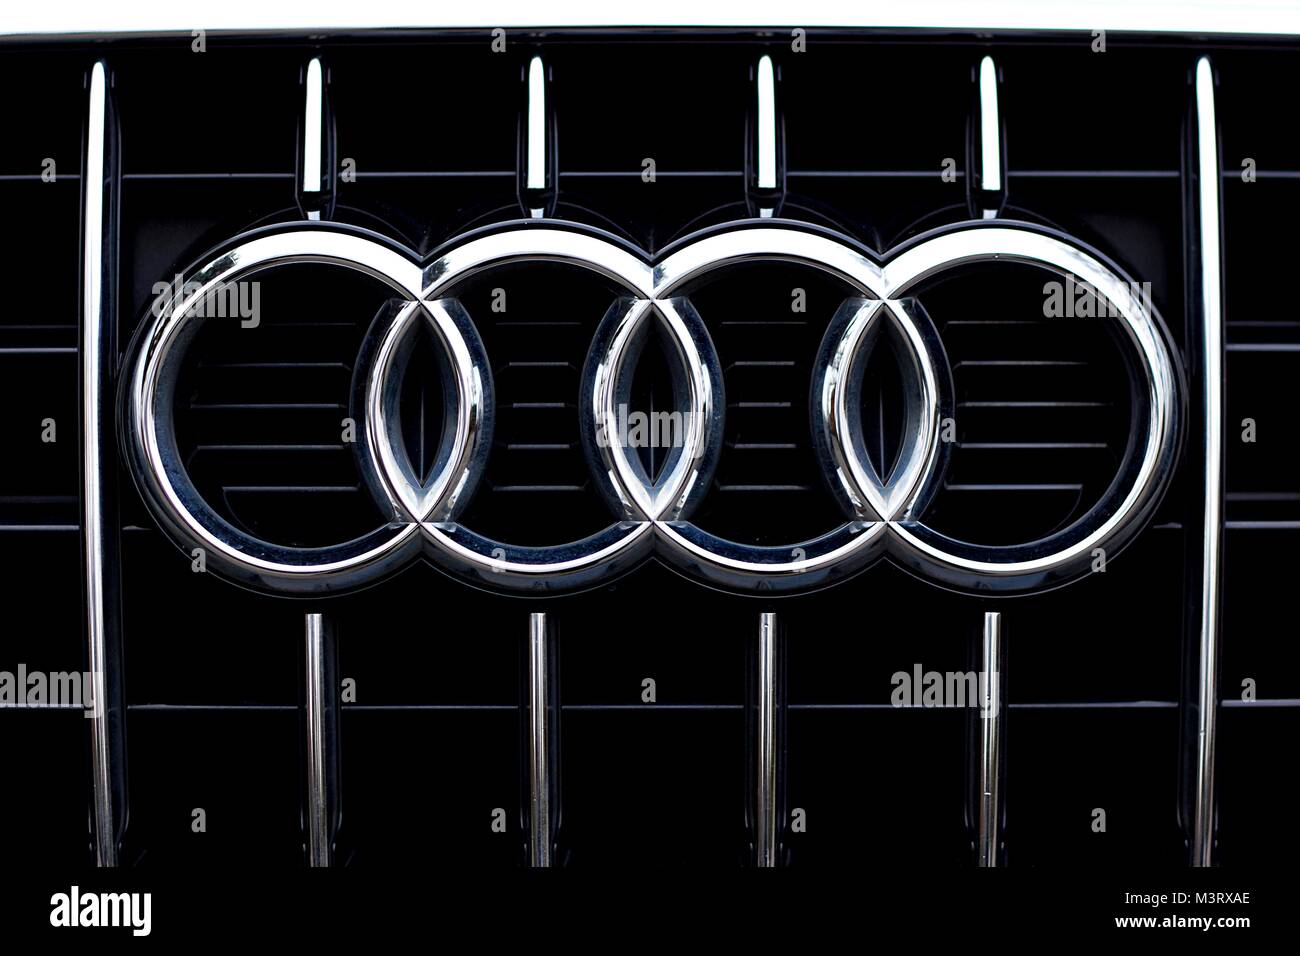 Audi Q5 logo on radiator grille, London, England Stock Photo